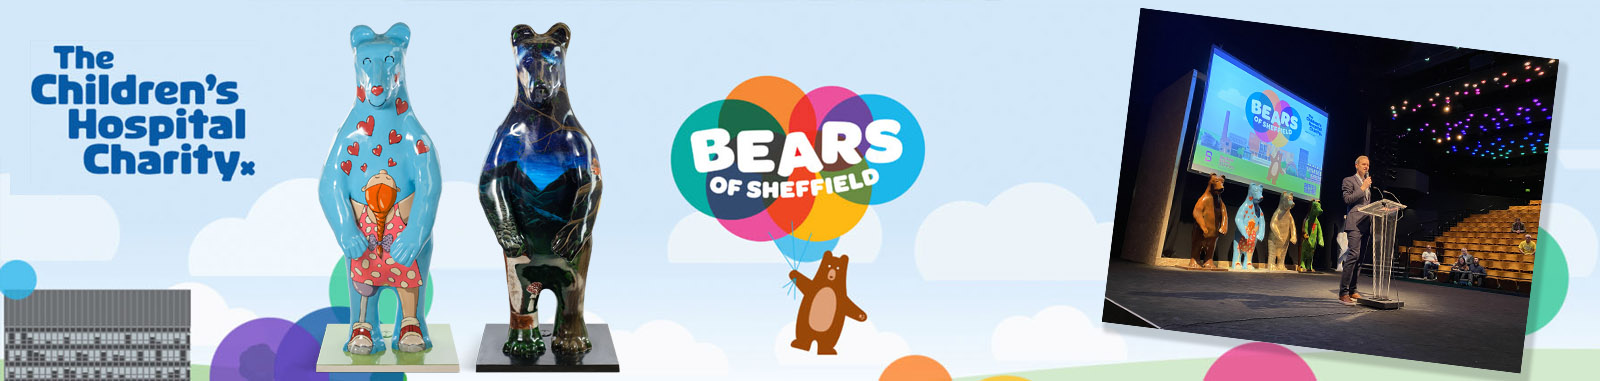 The Bears of Sheffield